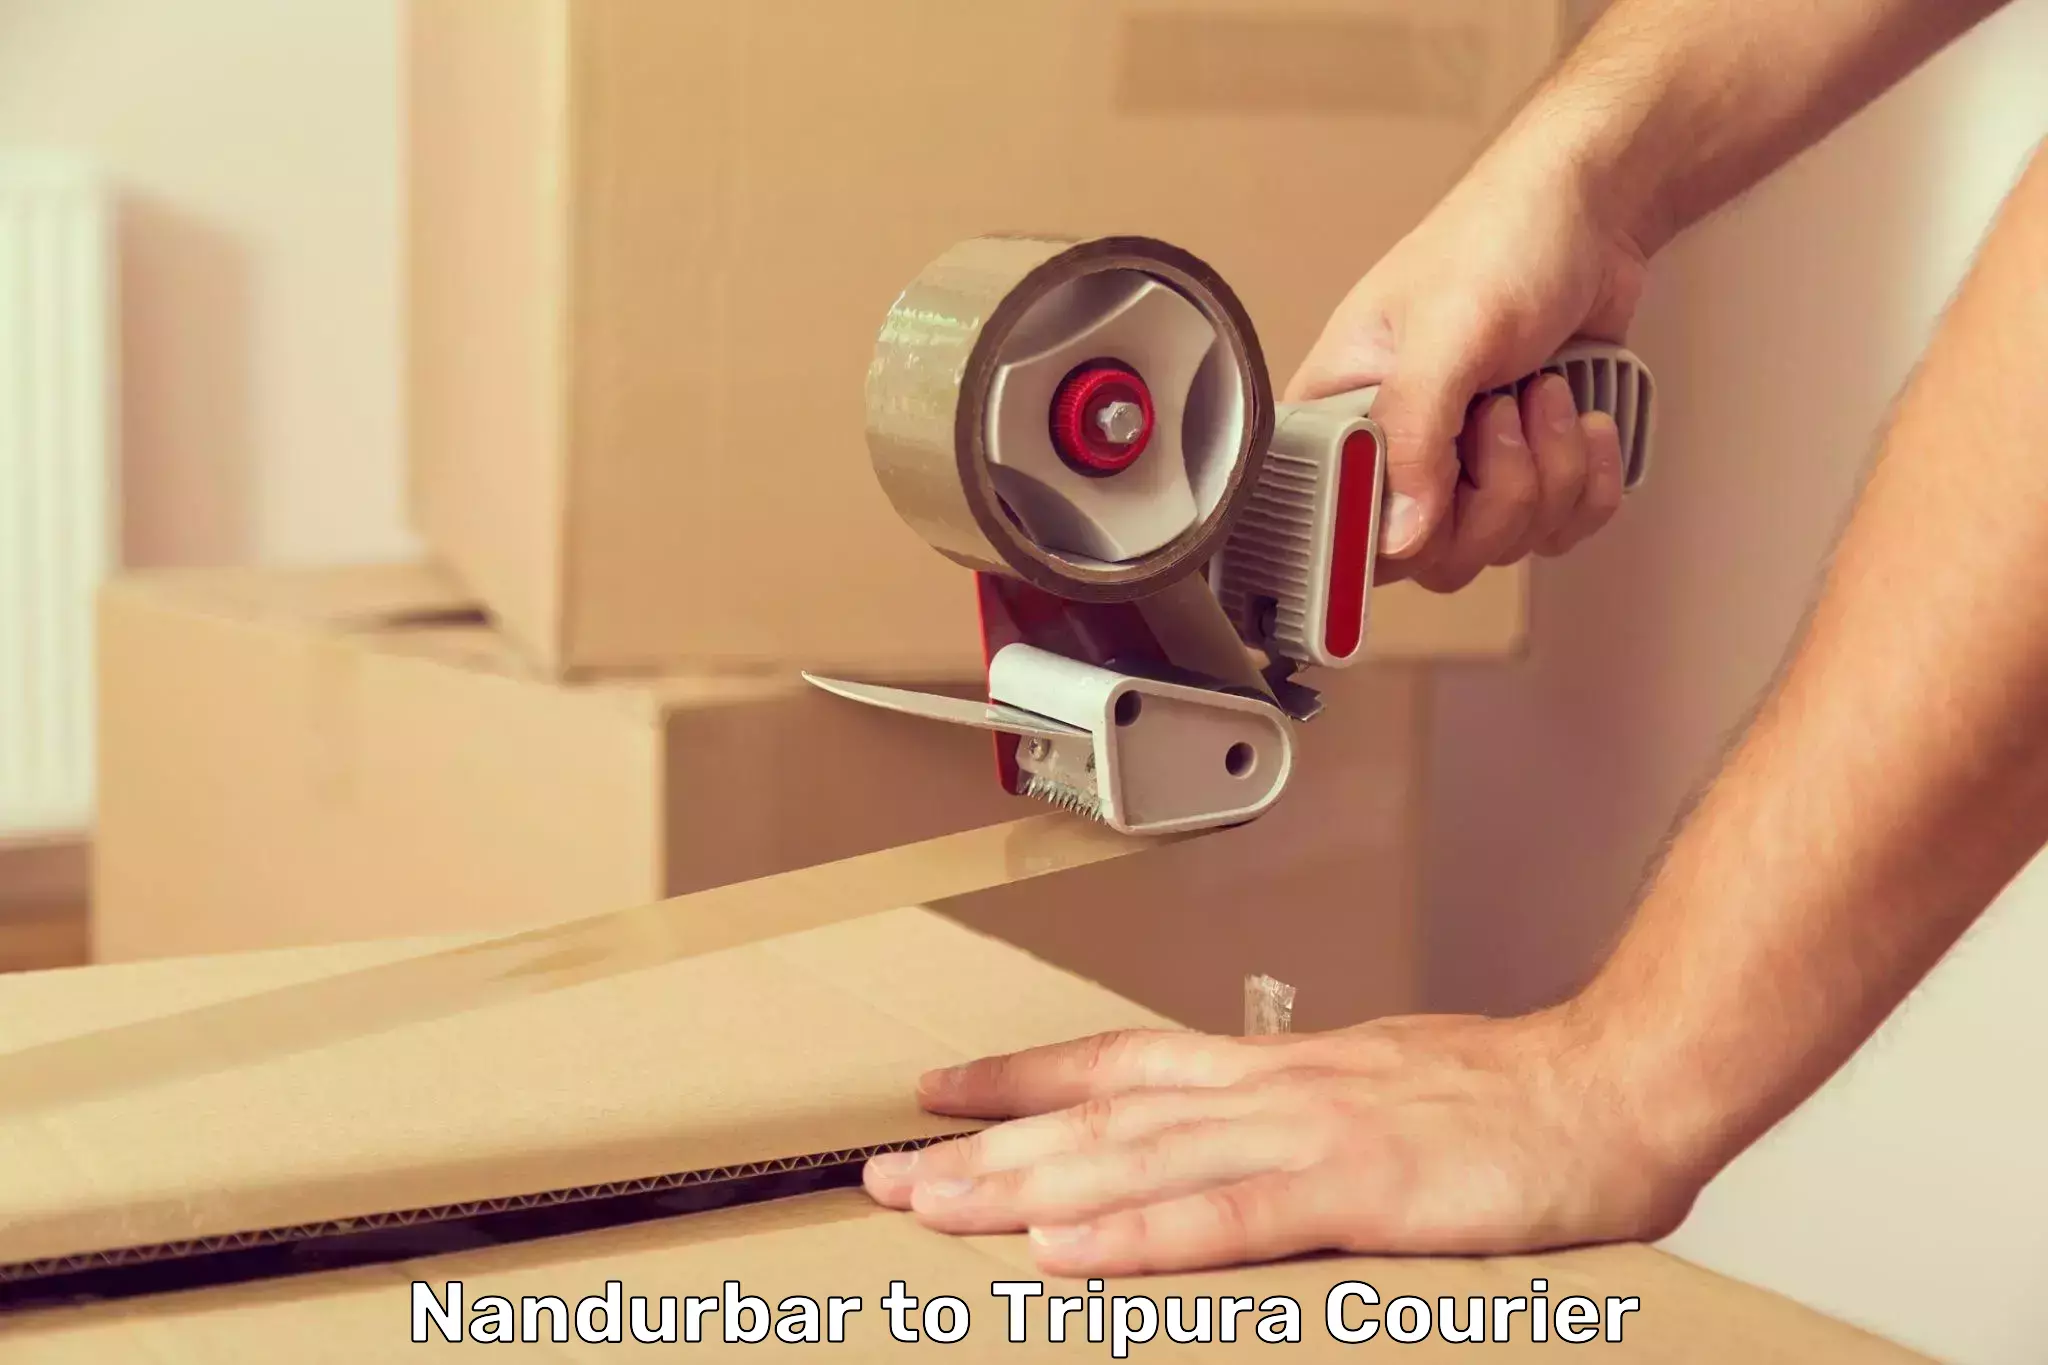 Flexible shipping options in Nandurbar to Udaipur Tripura